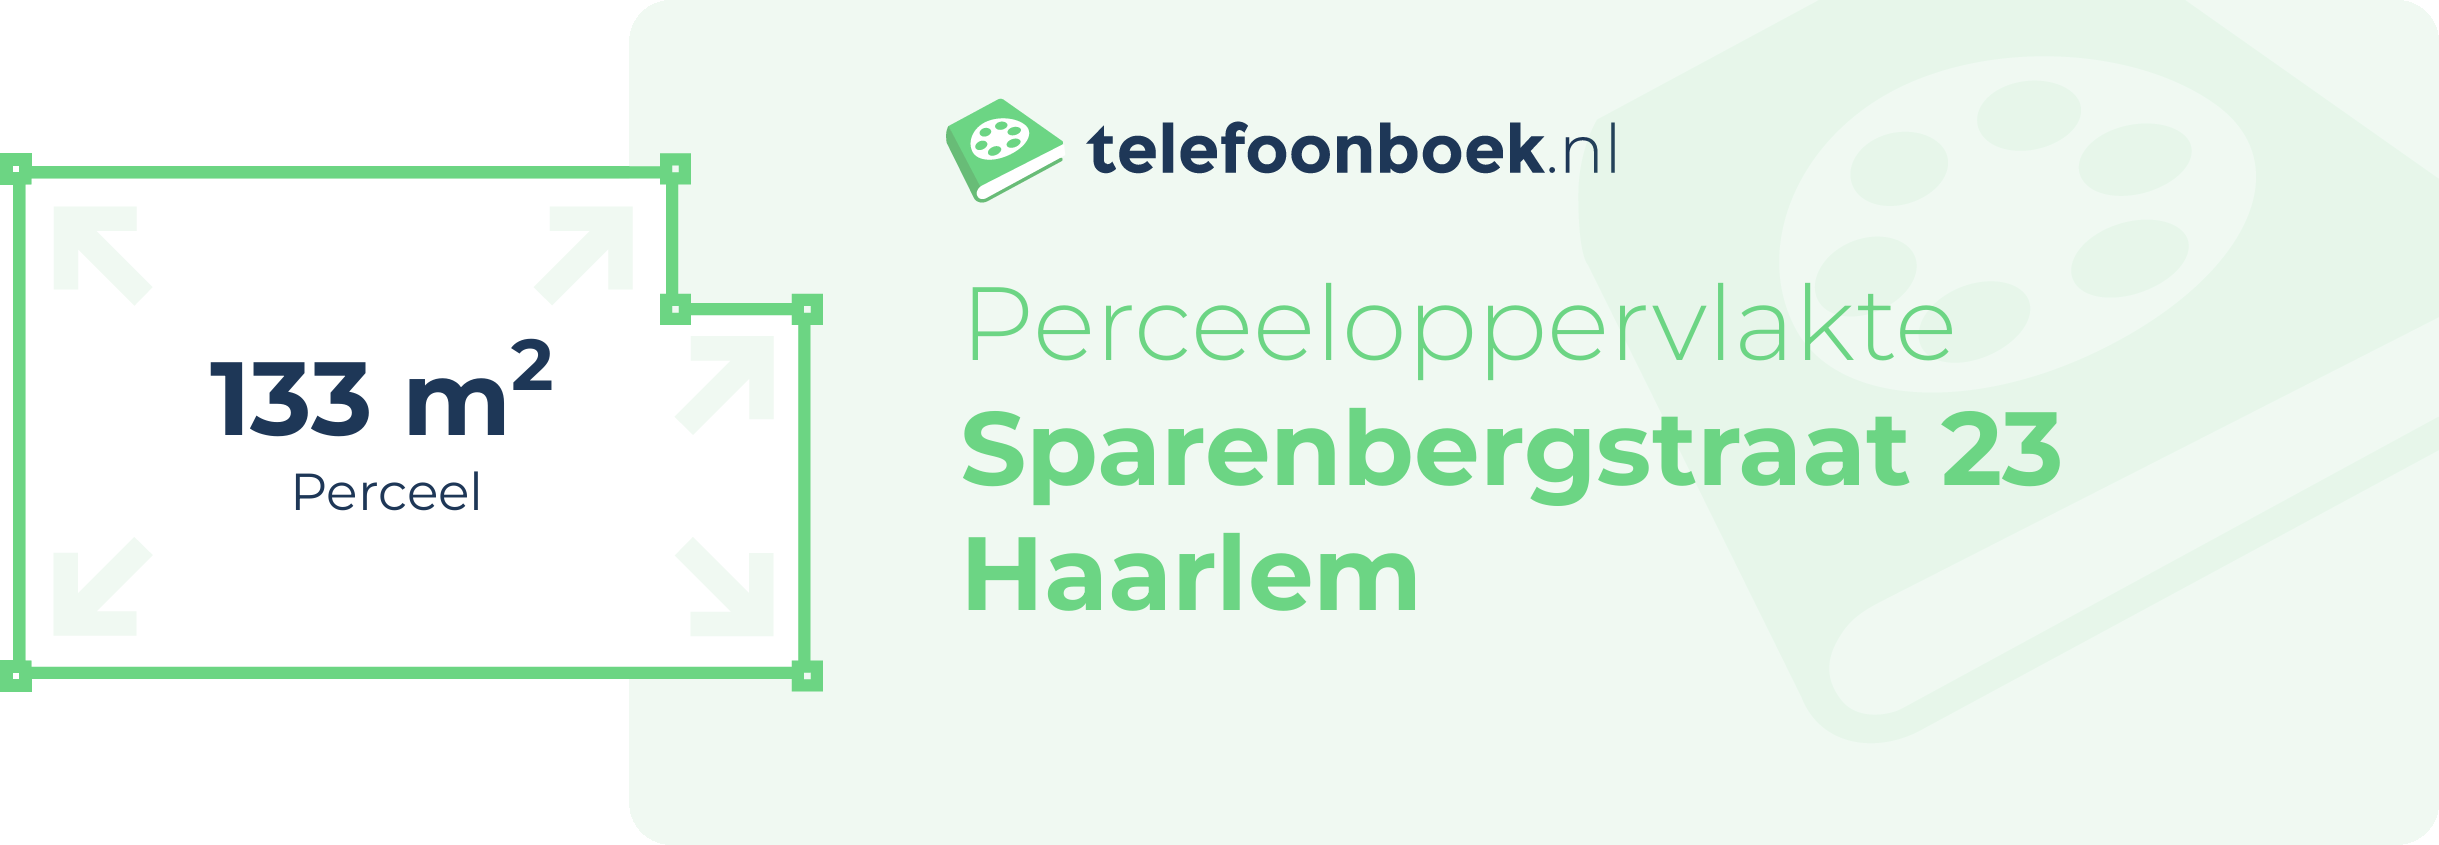 Perceeloppervlakte Sparenbergstraat 23 Haarlem